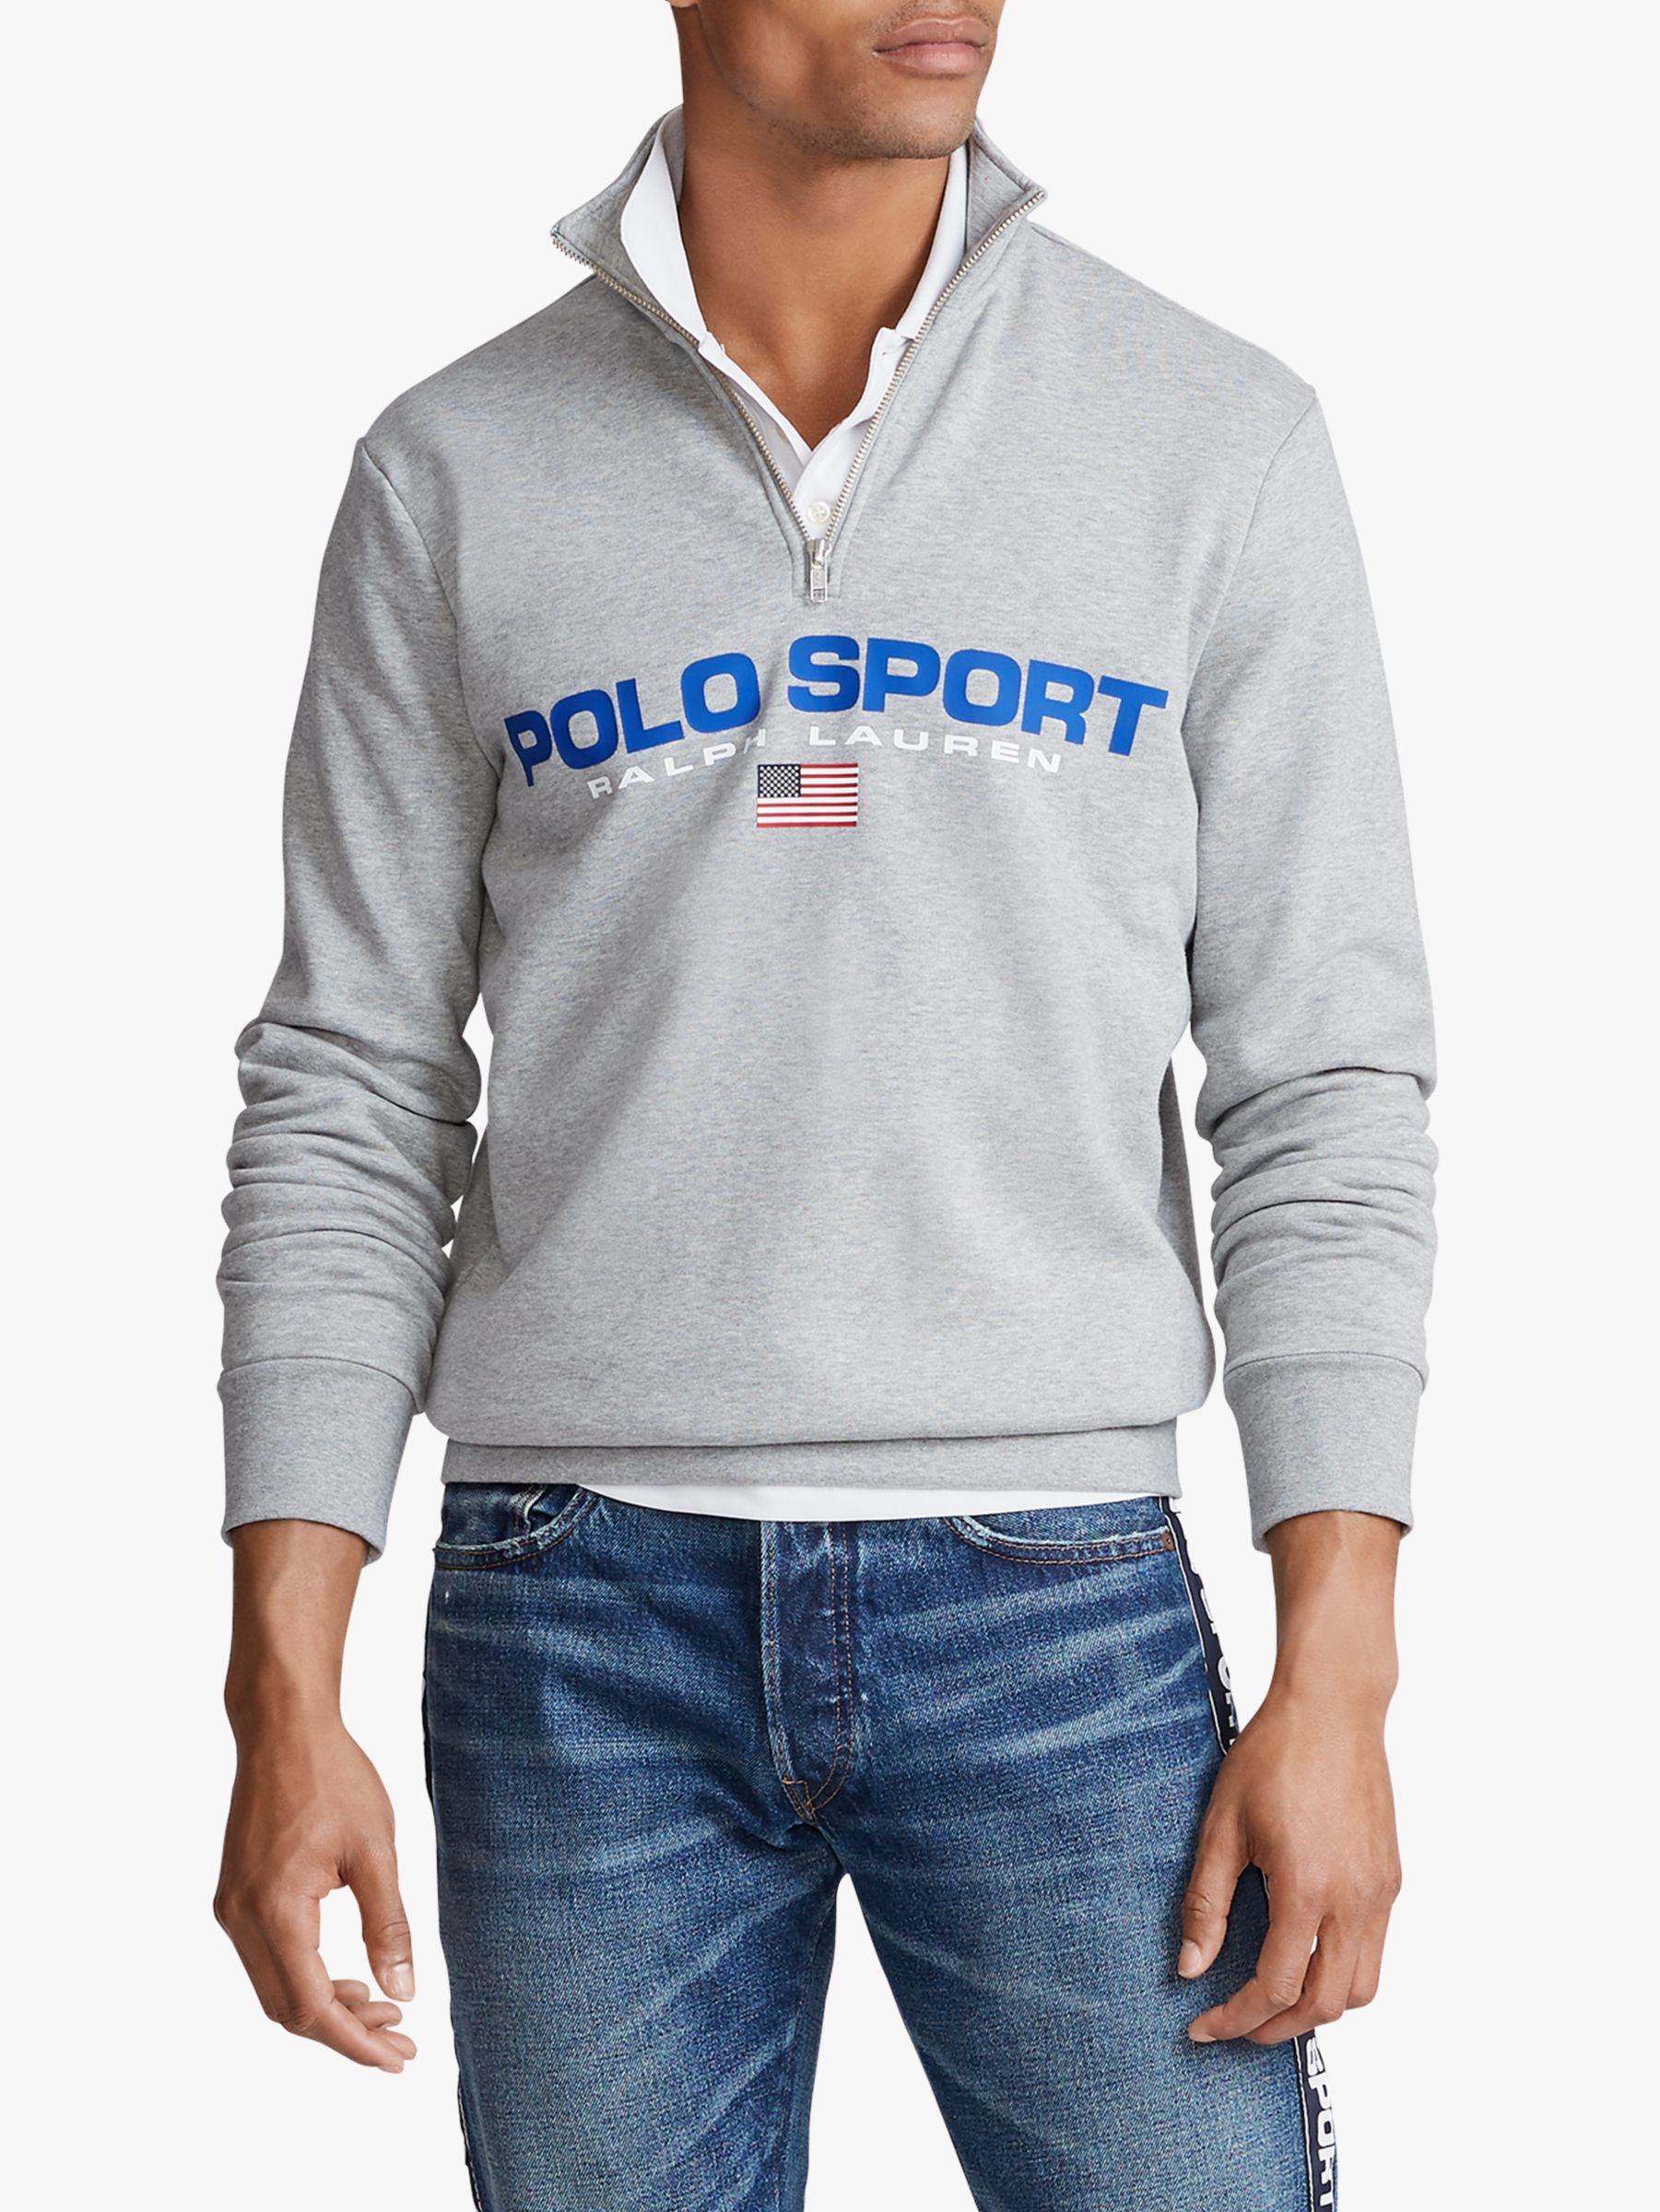 polo sport ralph lauren quarter zip